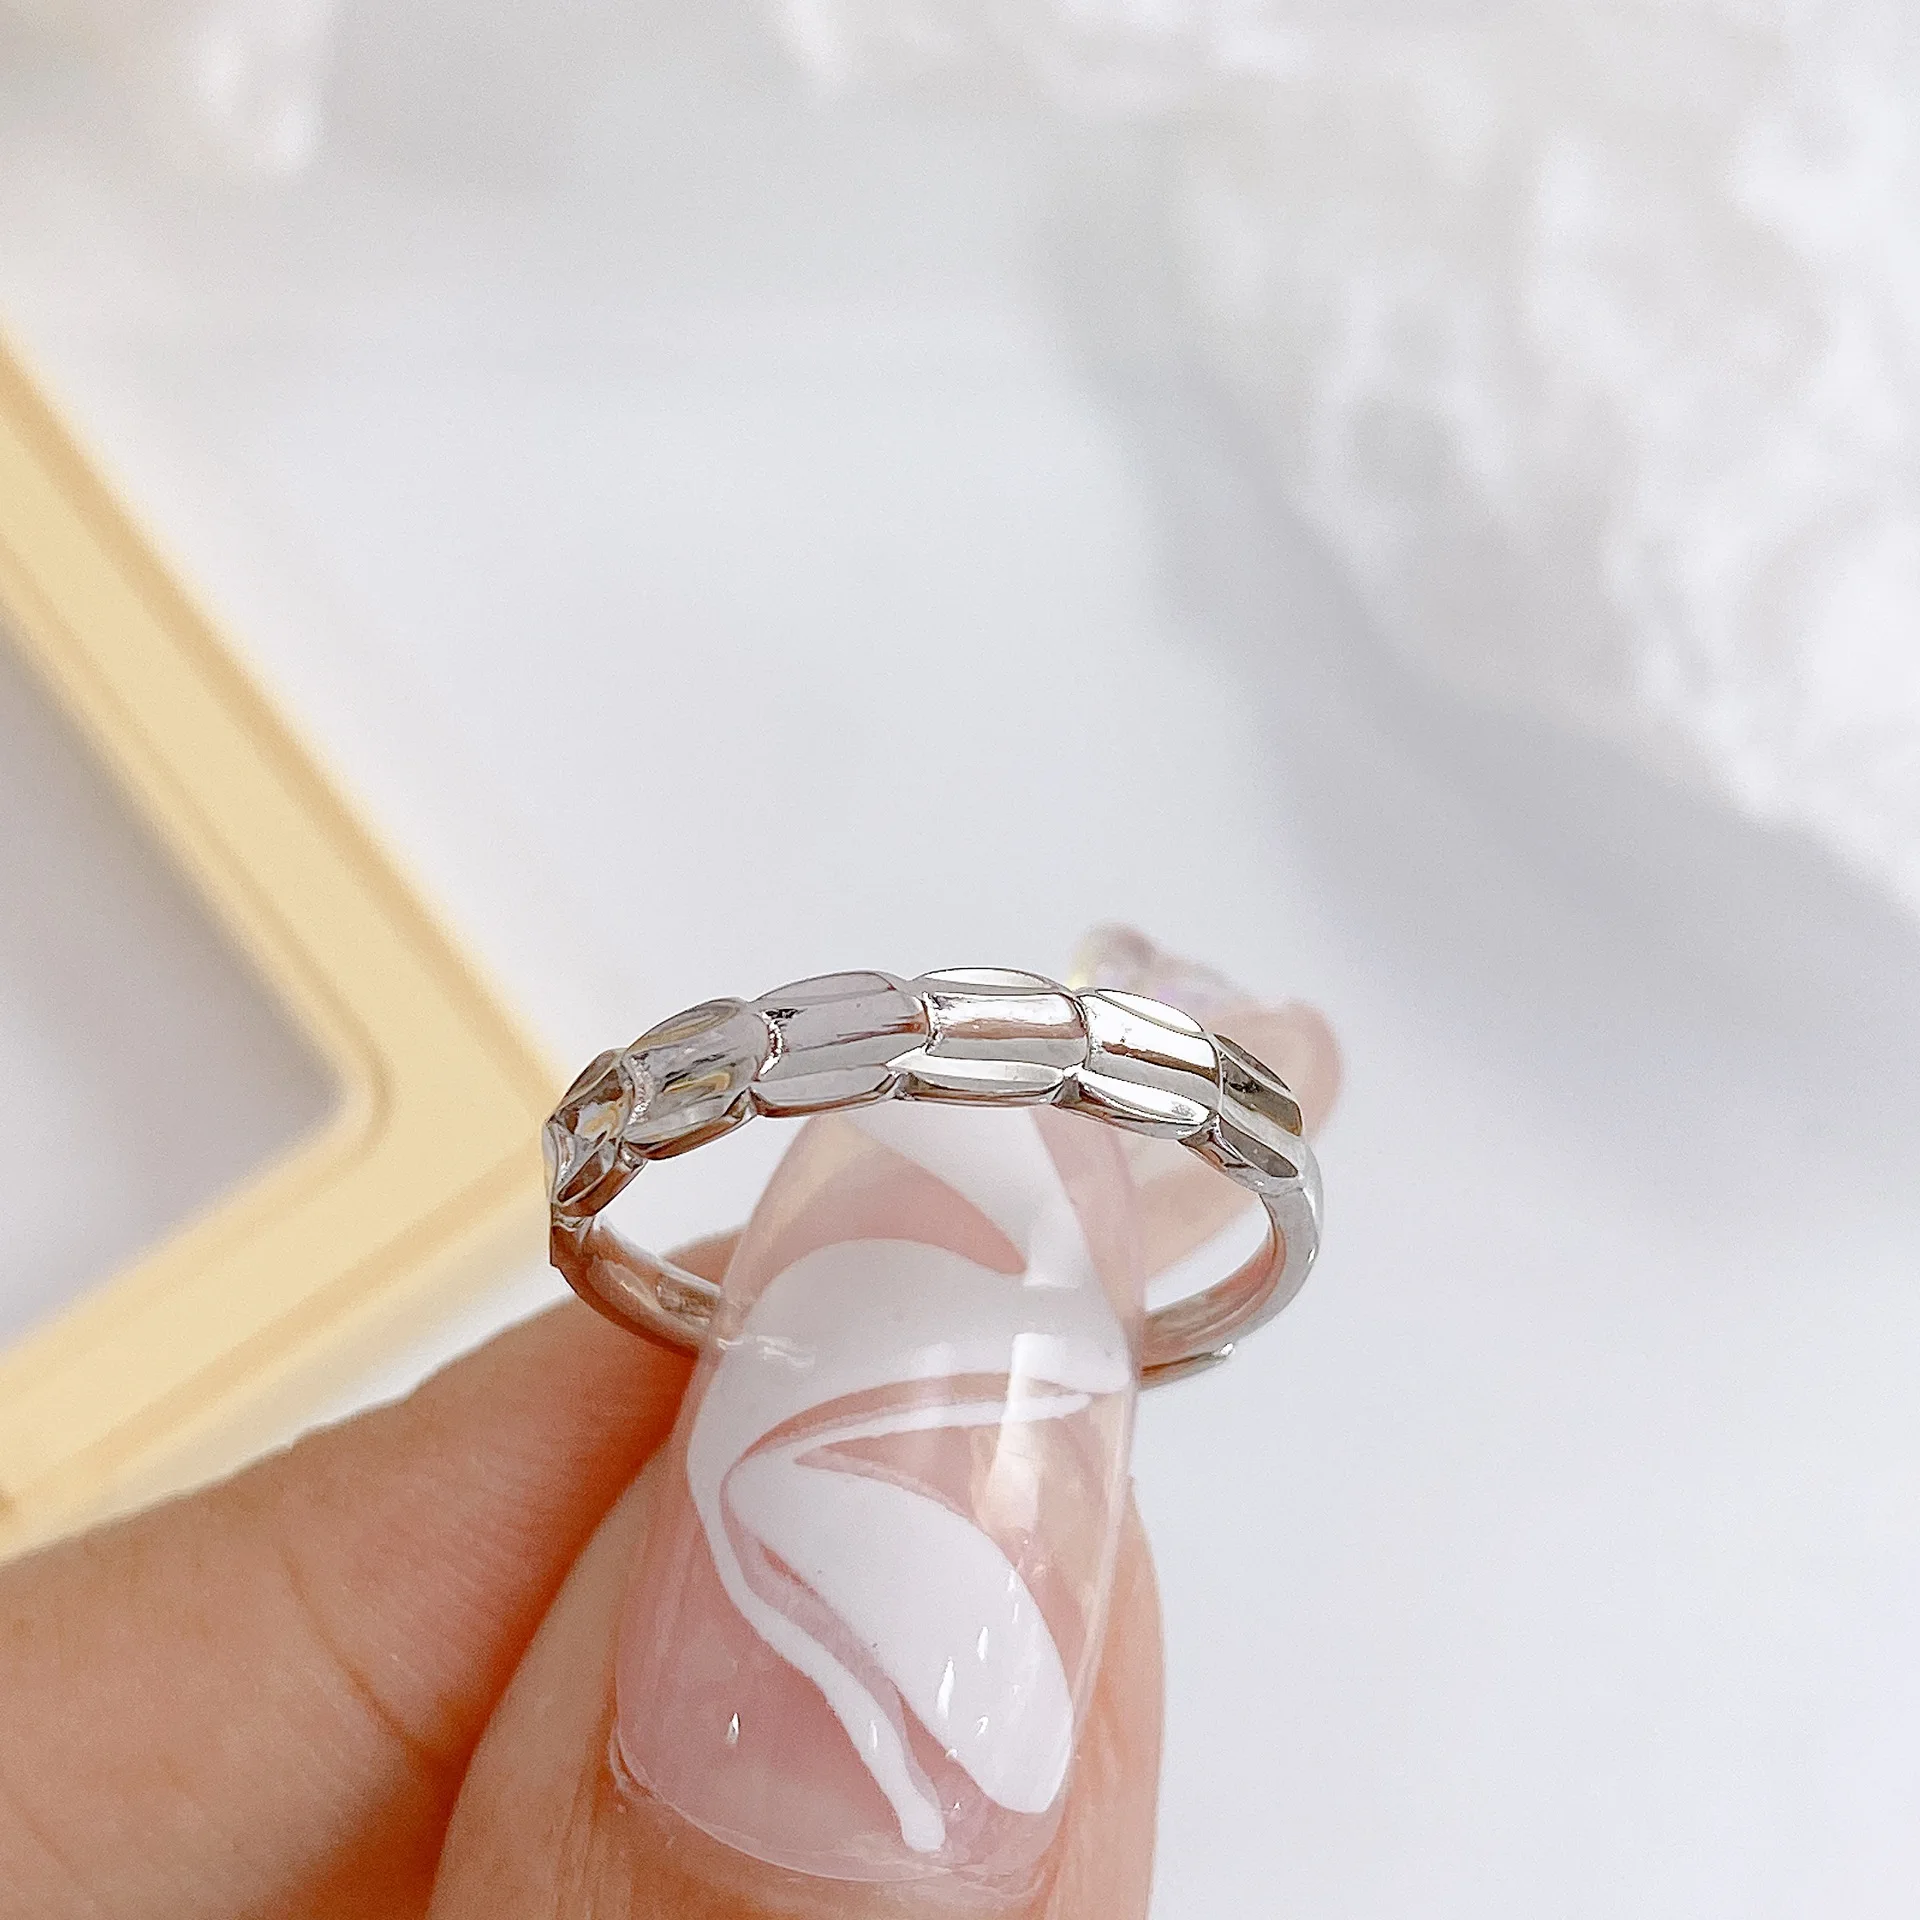 

S925 sterling silver ring female ring new simple niche design advanced index finger bracelet opening ring adjustable